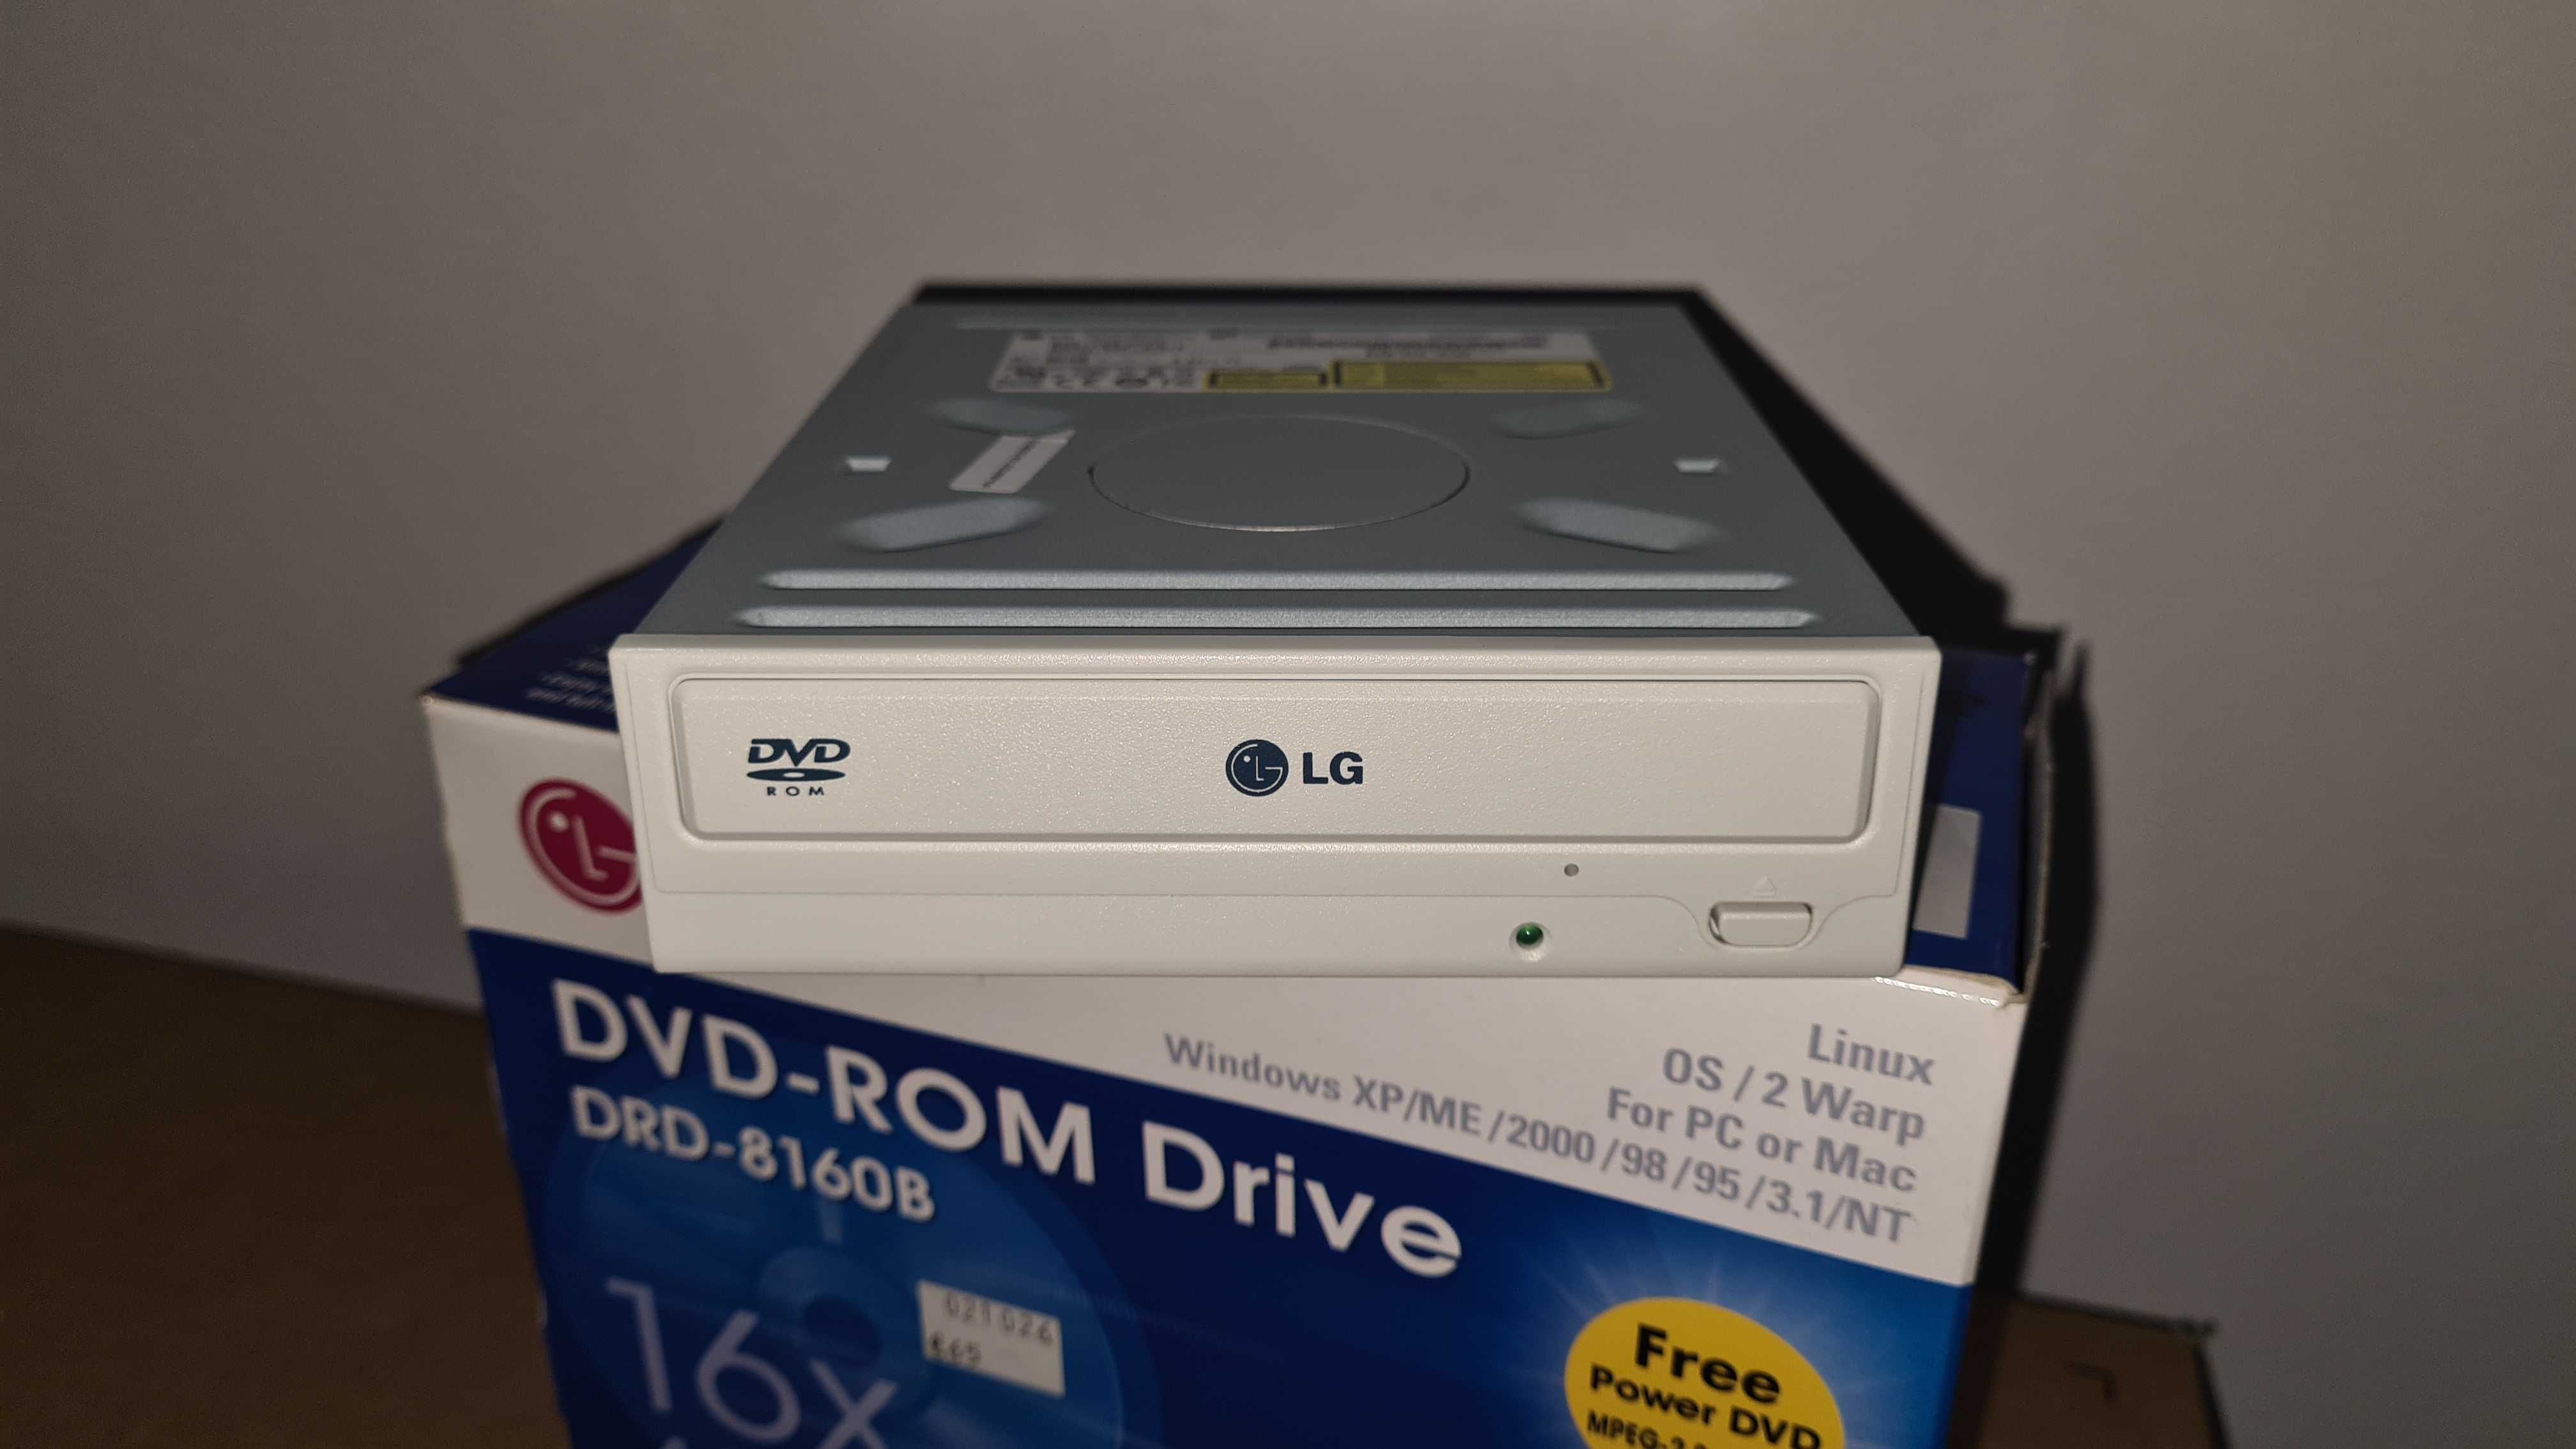 DVD ROM Drive LG DRD-8160B